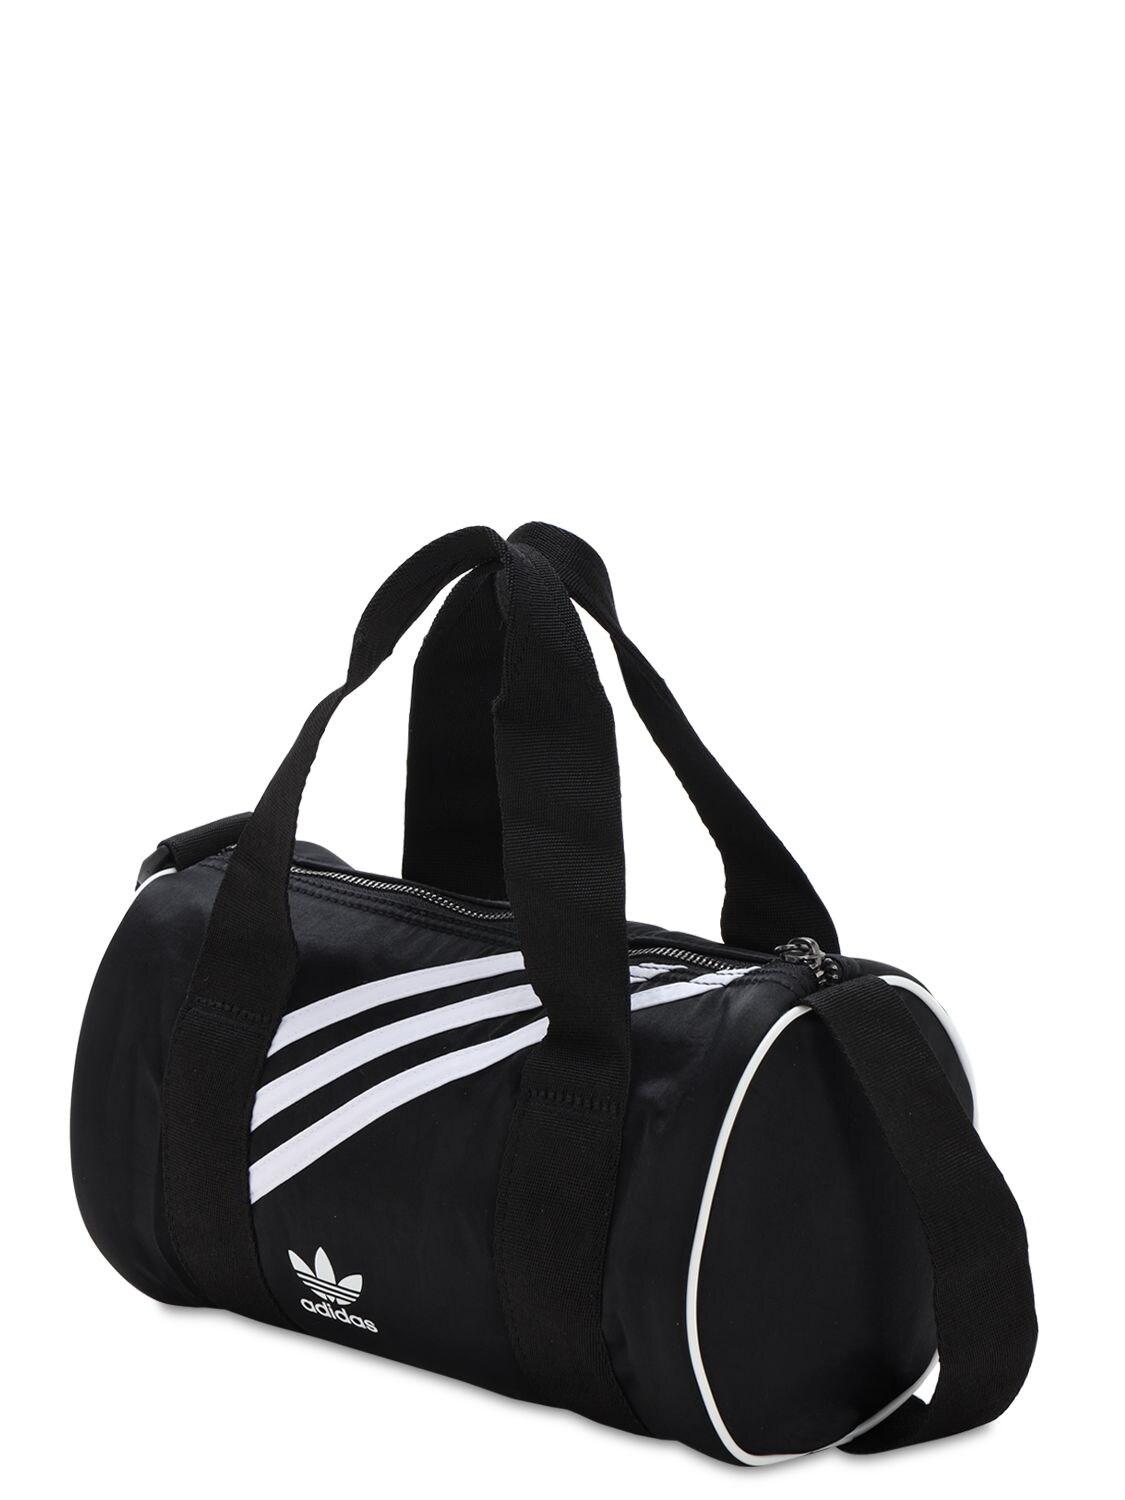 Acrobatics sextant Precursor adidas Originals Mini Nylon Duffle Bag in Black | Lyst